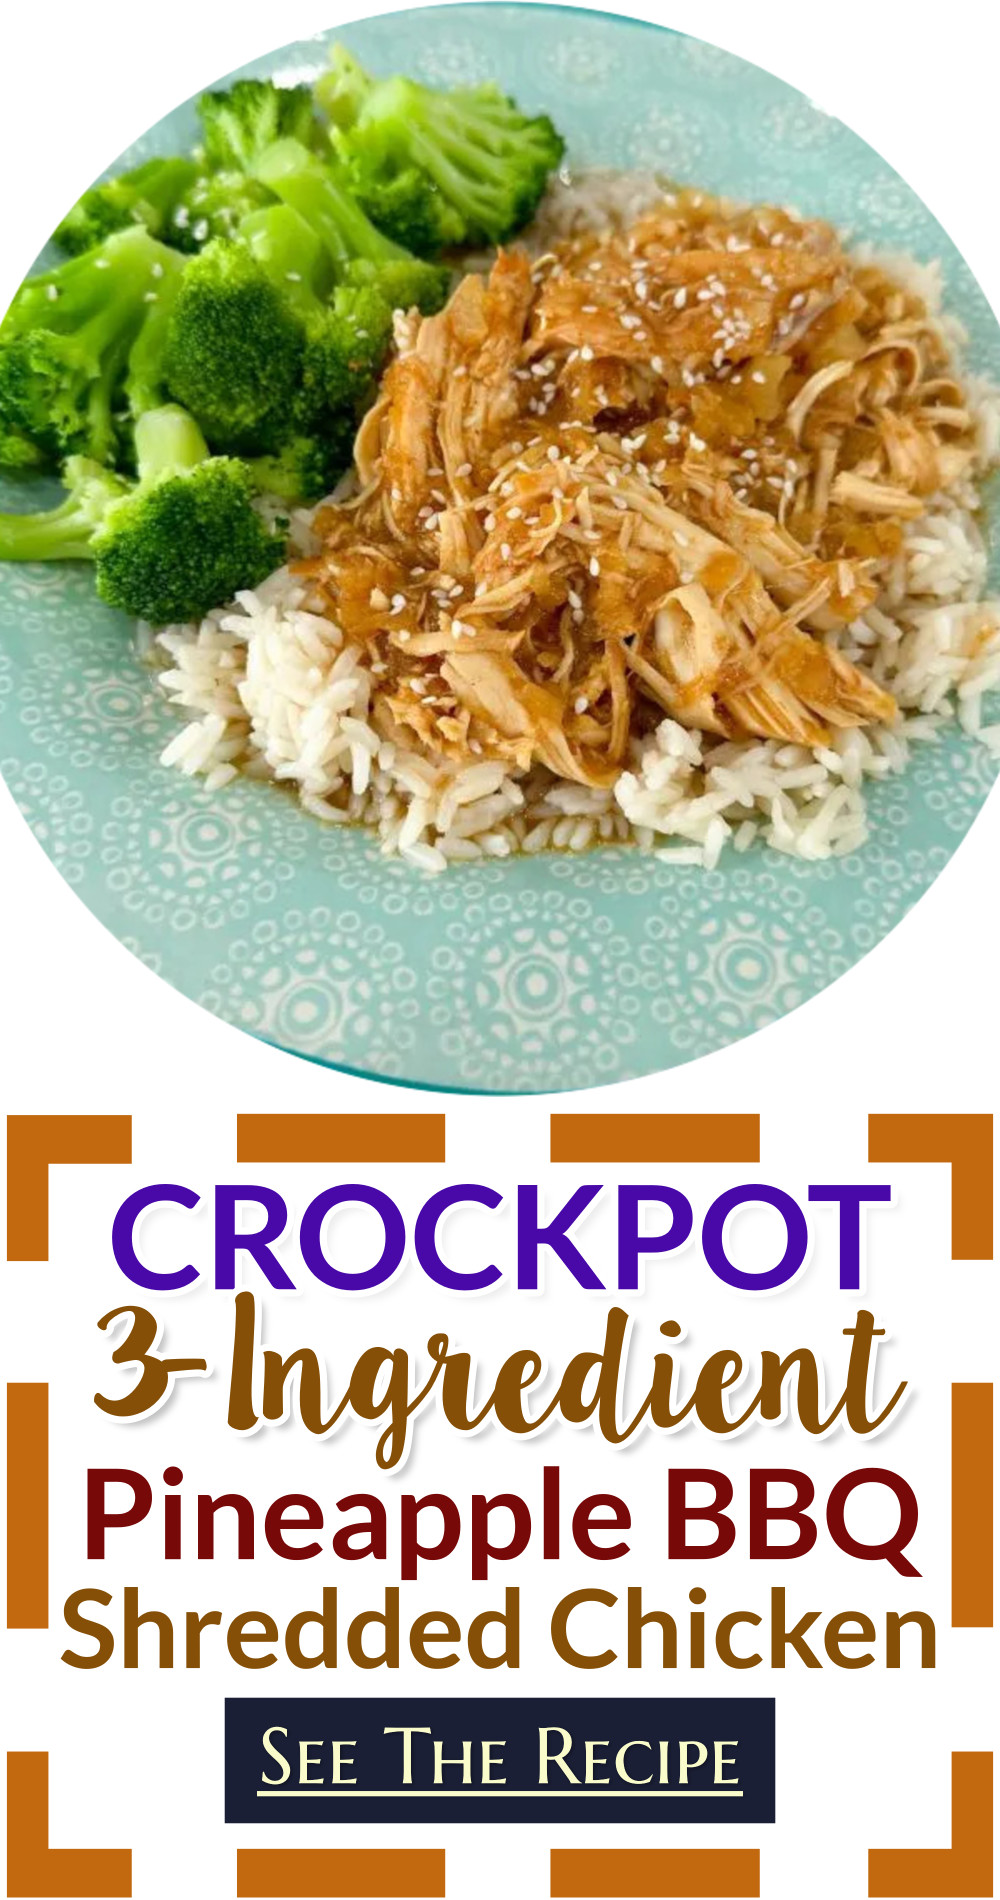 Crockpot 3-Ingredient Pineapple BBQ Shredded Chicken Recipe